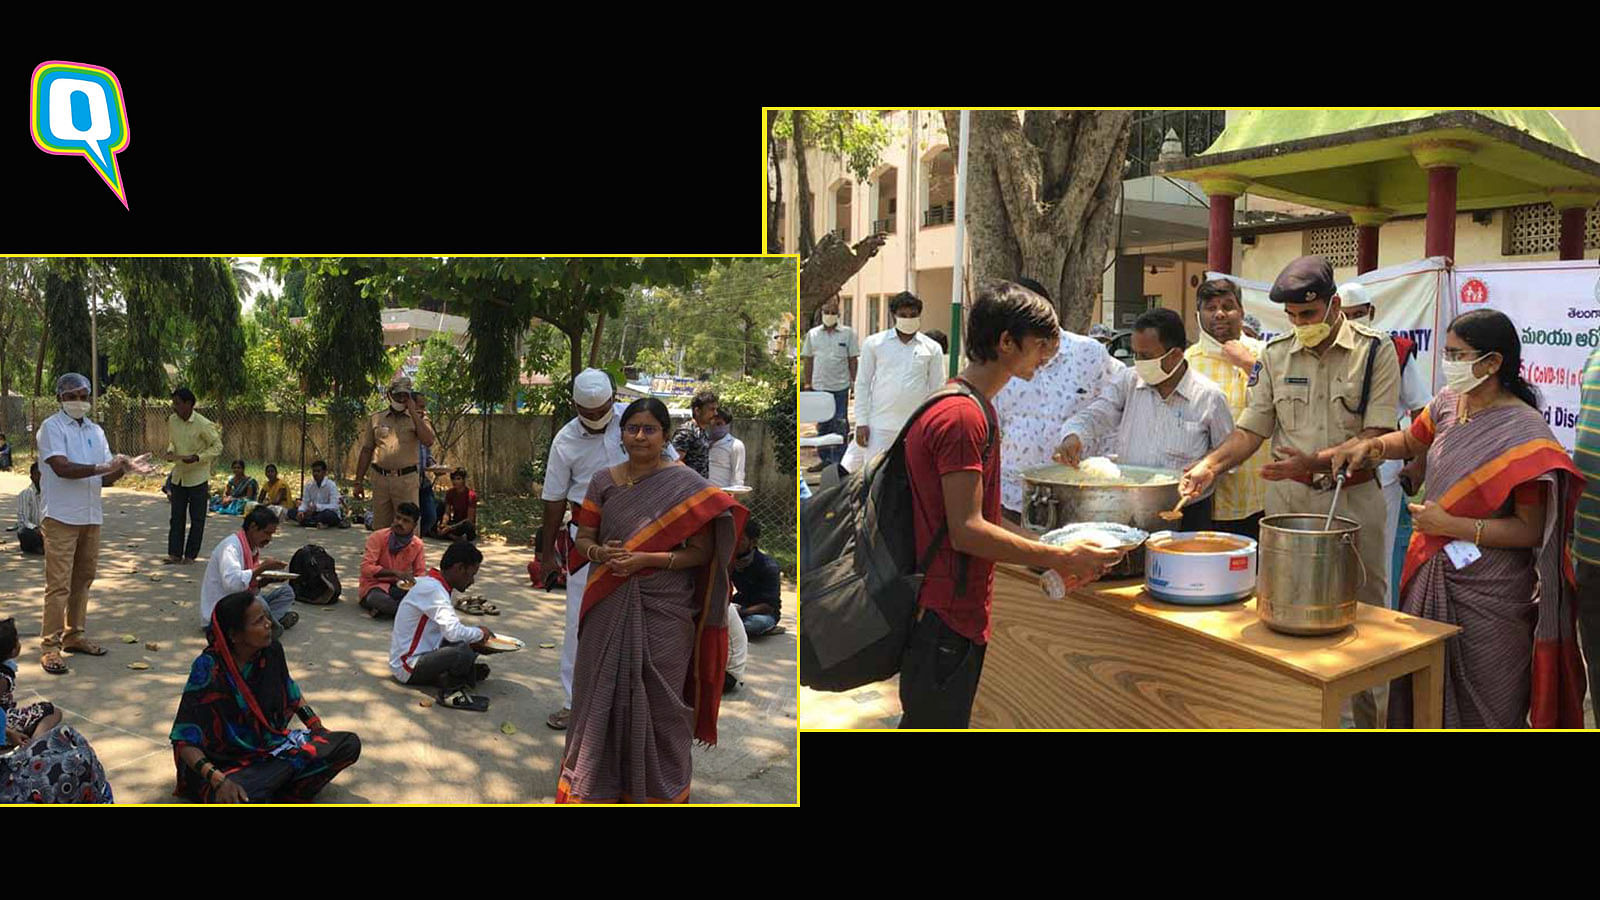 Judge K. Sai Rama Devi of the Sangareddy district in Telangana providing food for the migrant poor